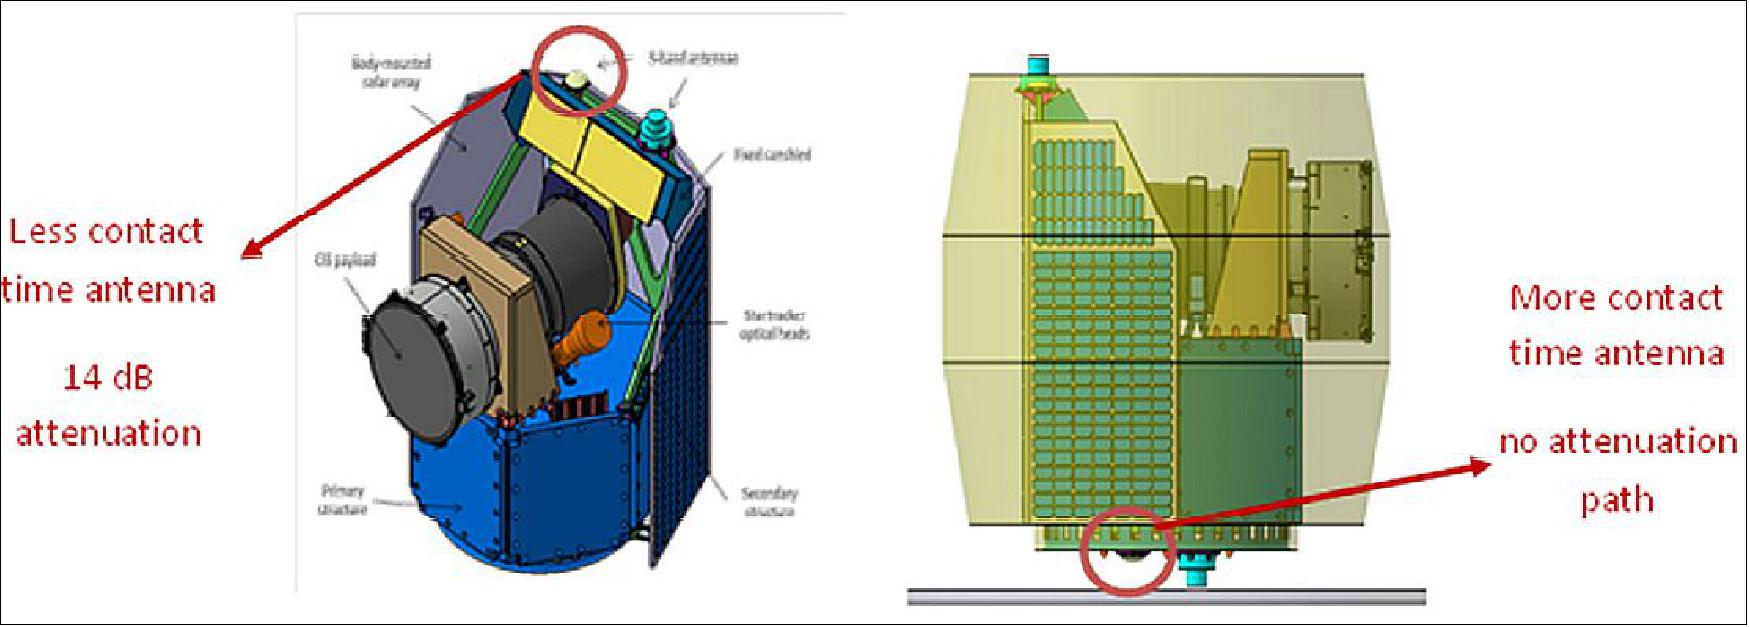 Figure 11: Antenna location in spacecraft (image credit: CHEOPS Team)